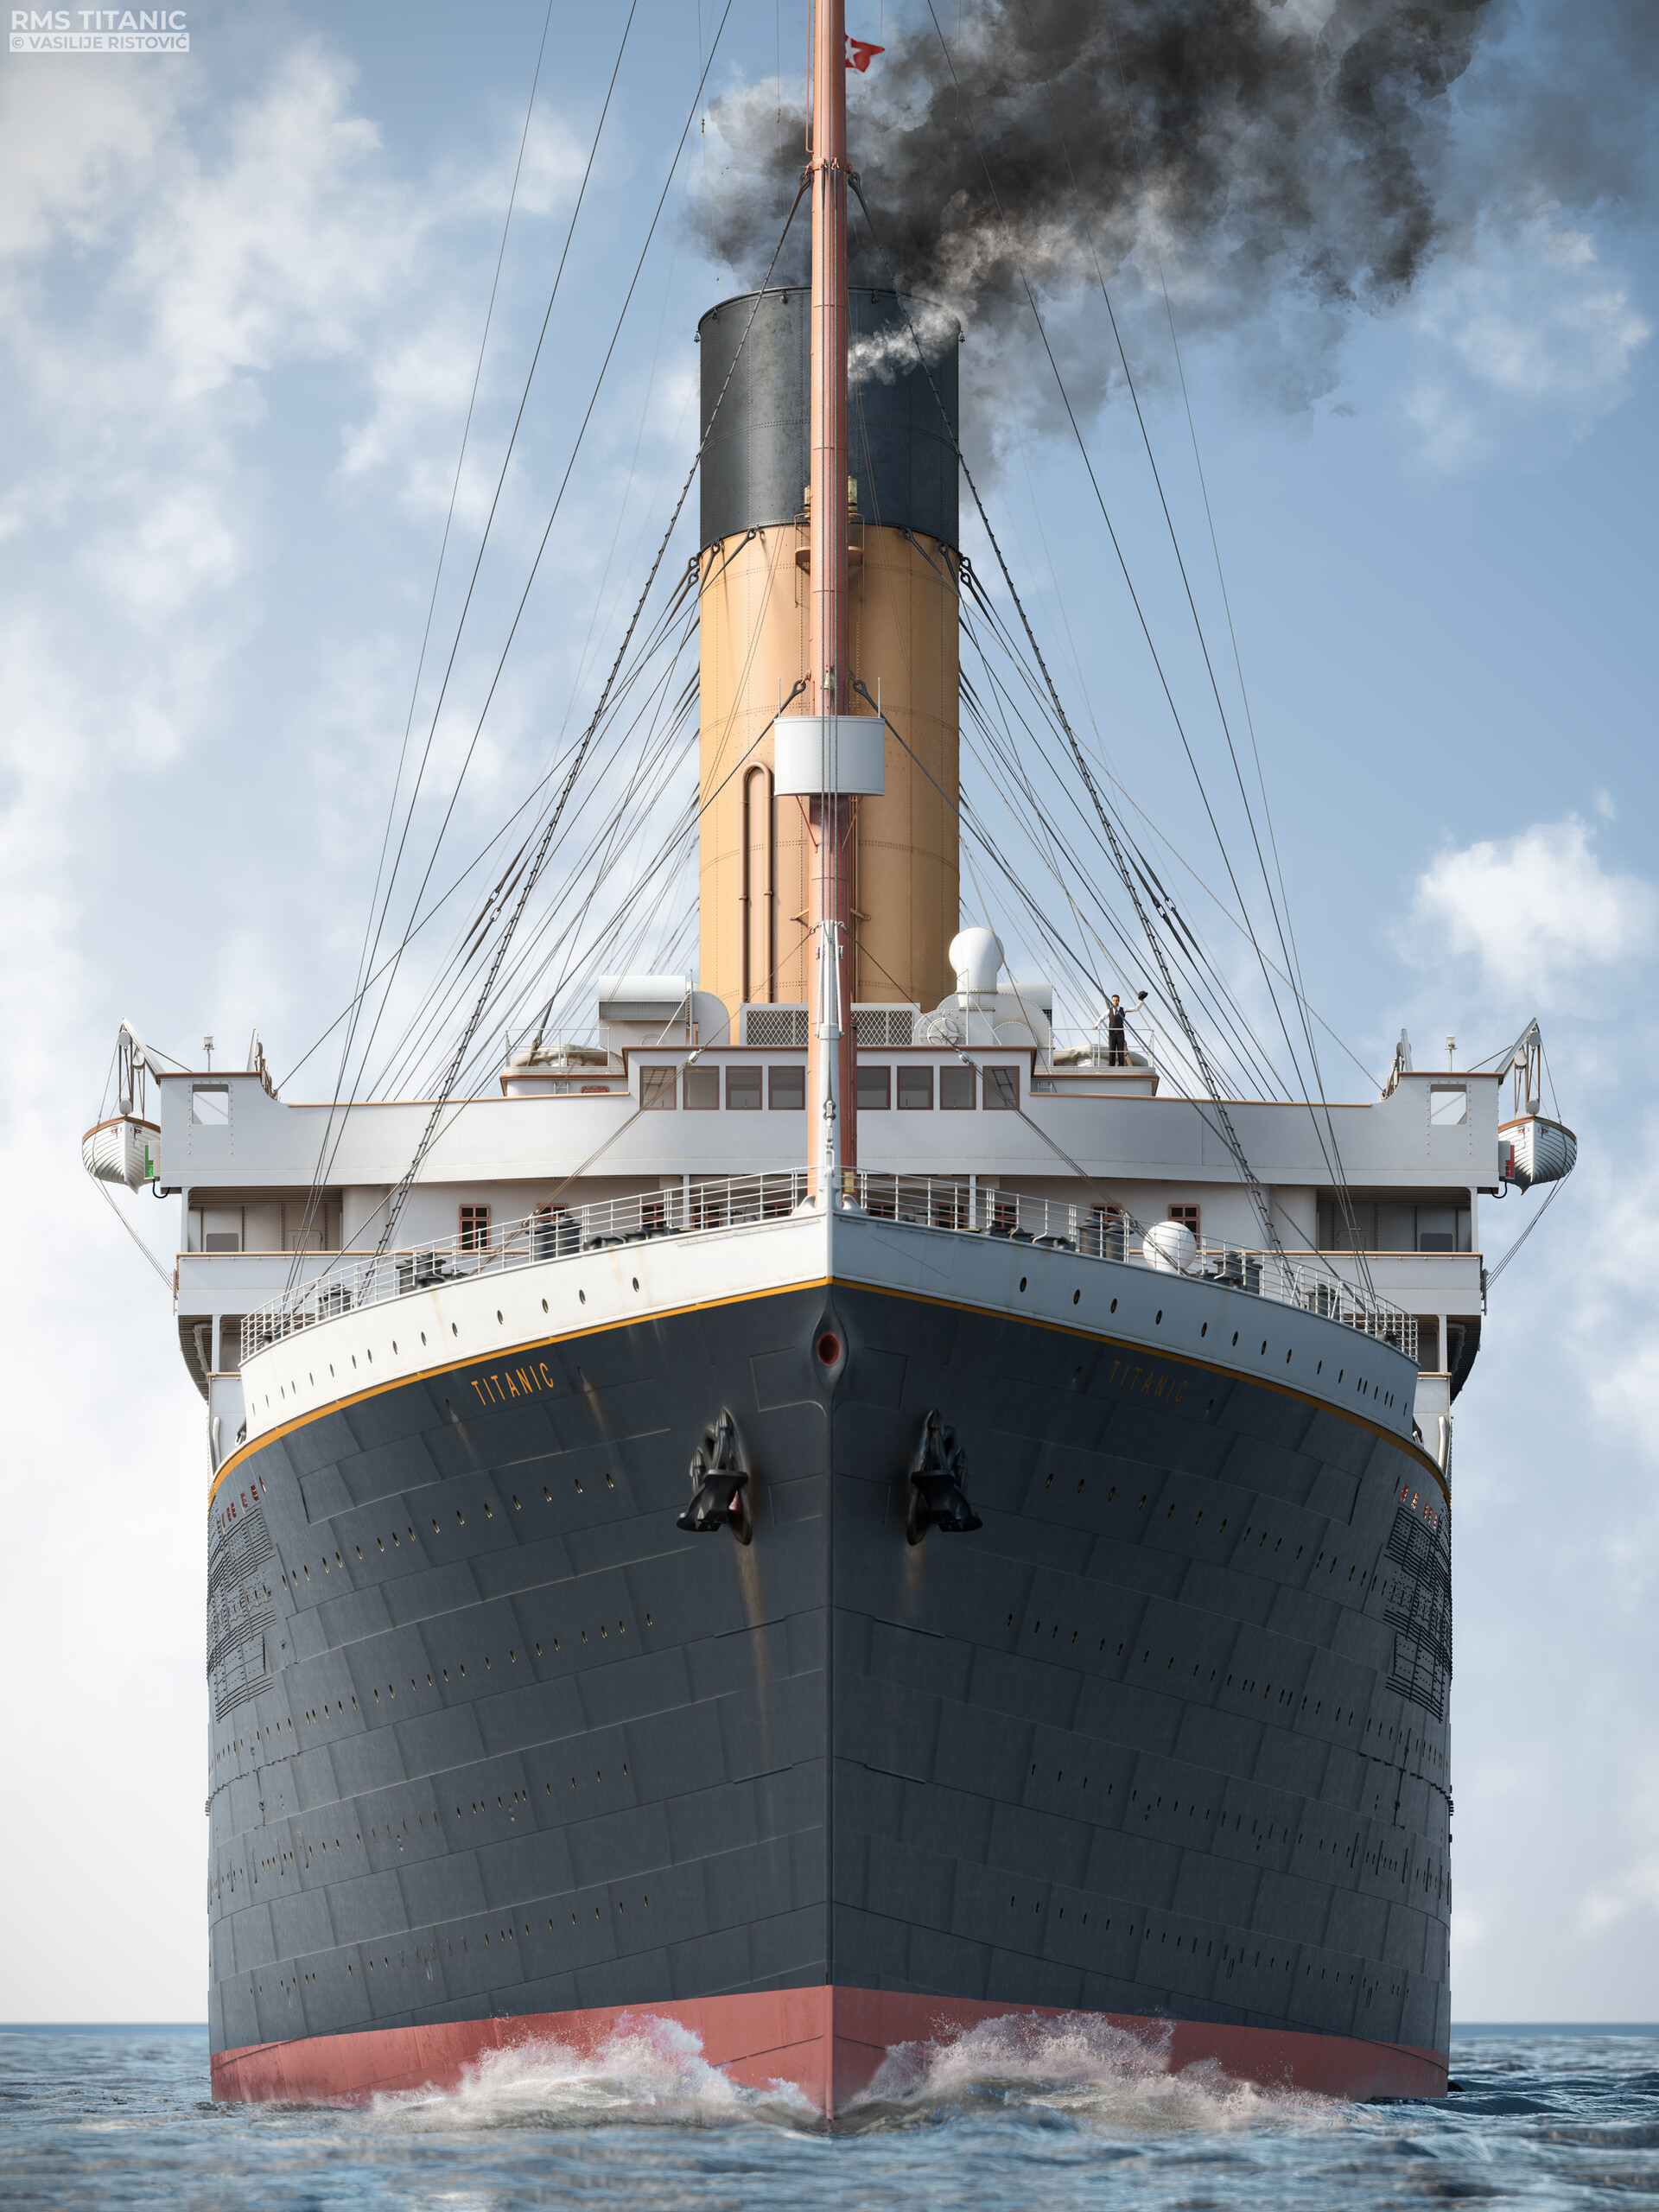 Rms Titanic Model